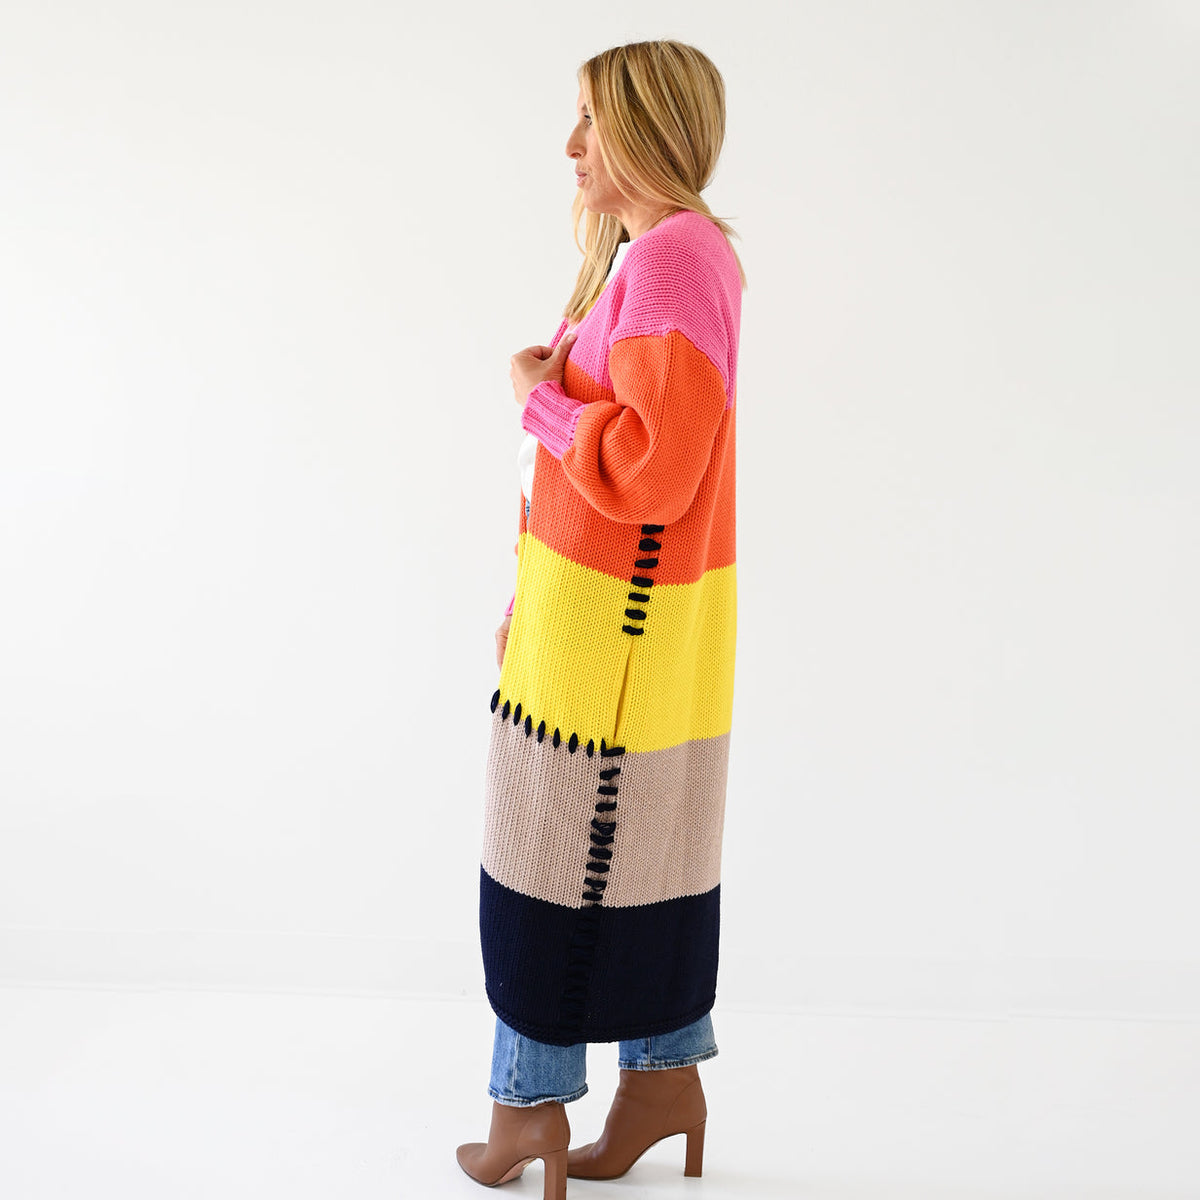 Kerri Rosenthal Alaina Cabin Stripe Cotton Duster - Size M Available